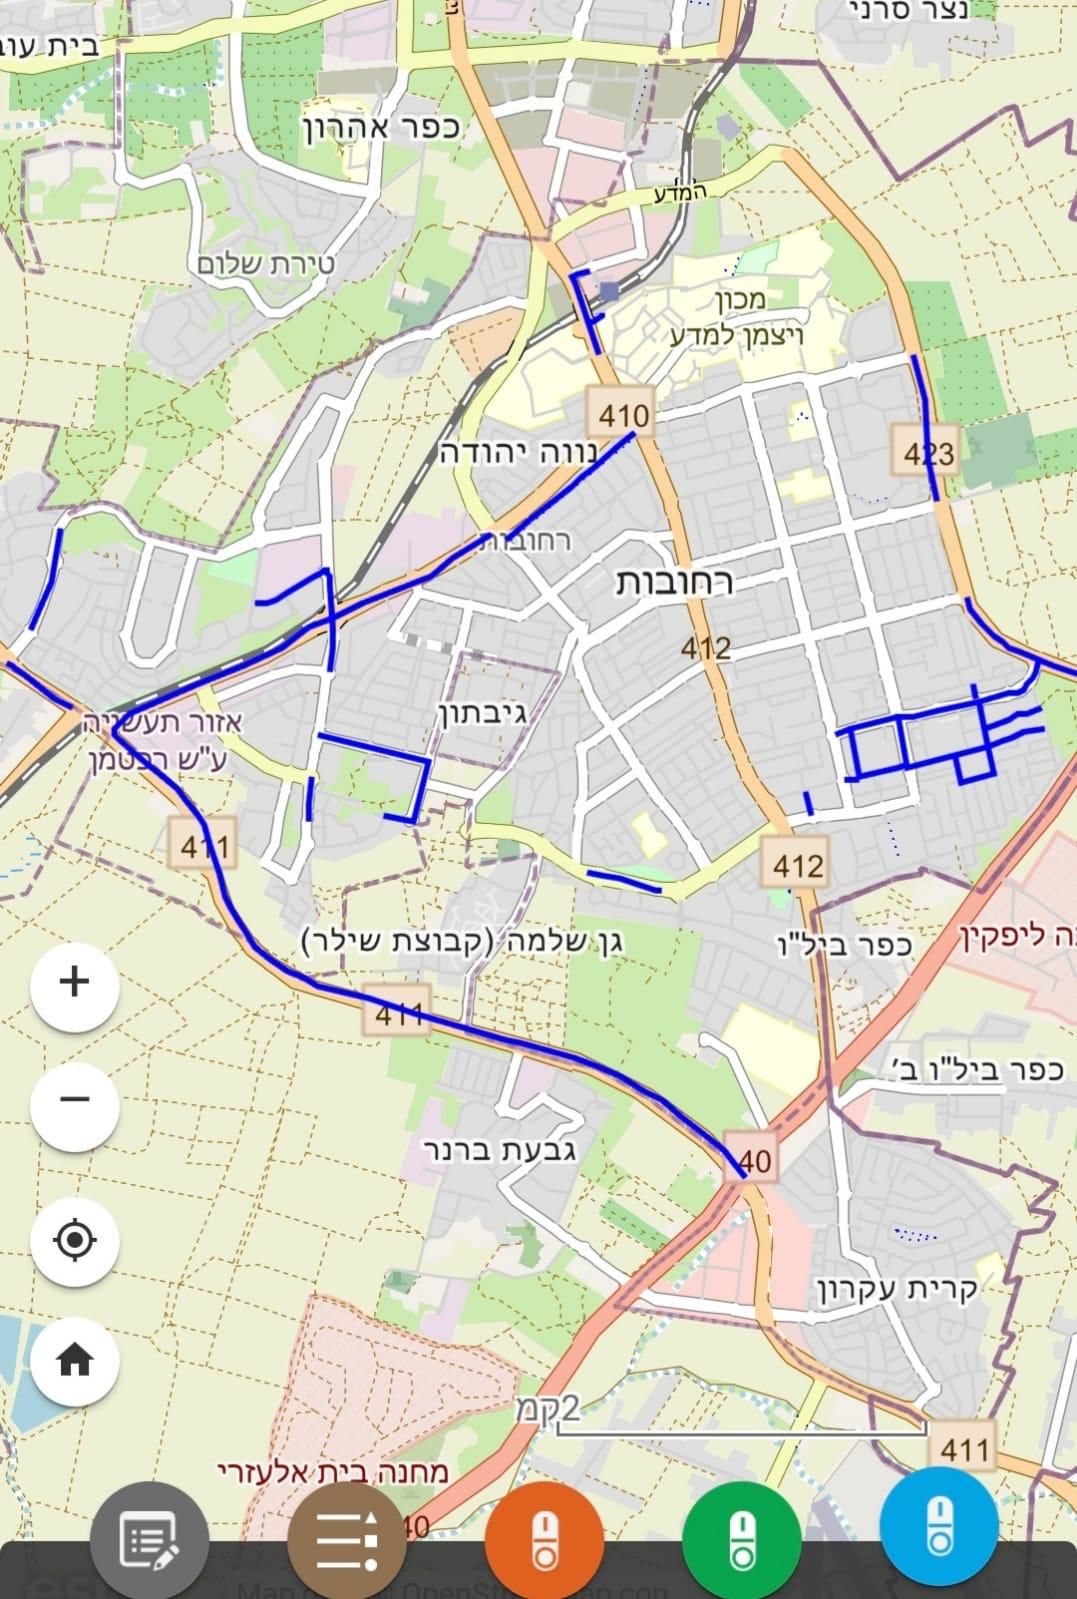 moderately Post Deviate עיריית רחובות בשיתוף קבוצת רוכבי אופניים, יצרו יחד מפה אינטראקטיבית של כל  מסלולי האופניים הפעילים ברחובות וכאלו שעתידים להיסלל - BE106 חדשות רחובות